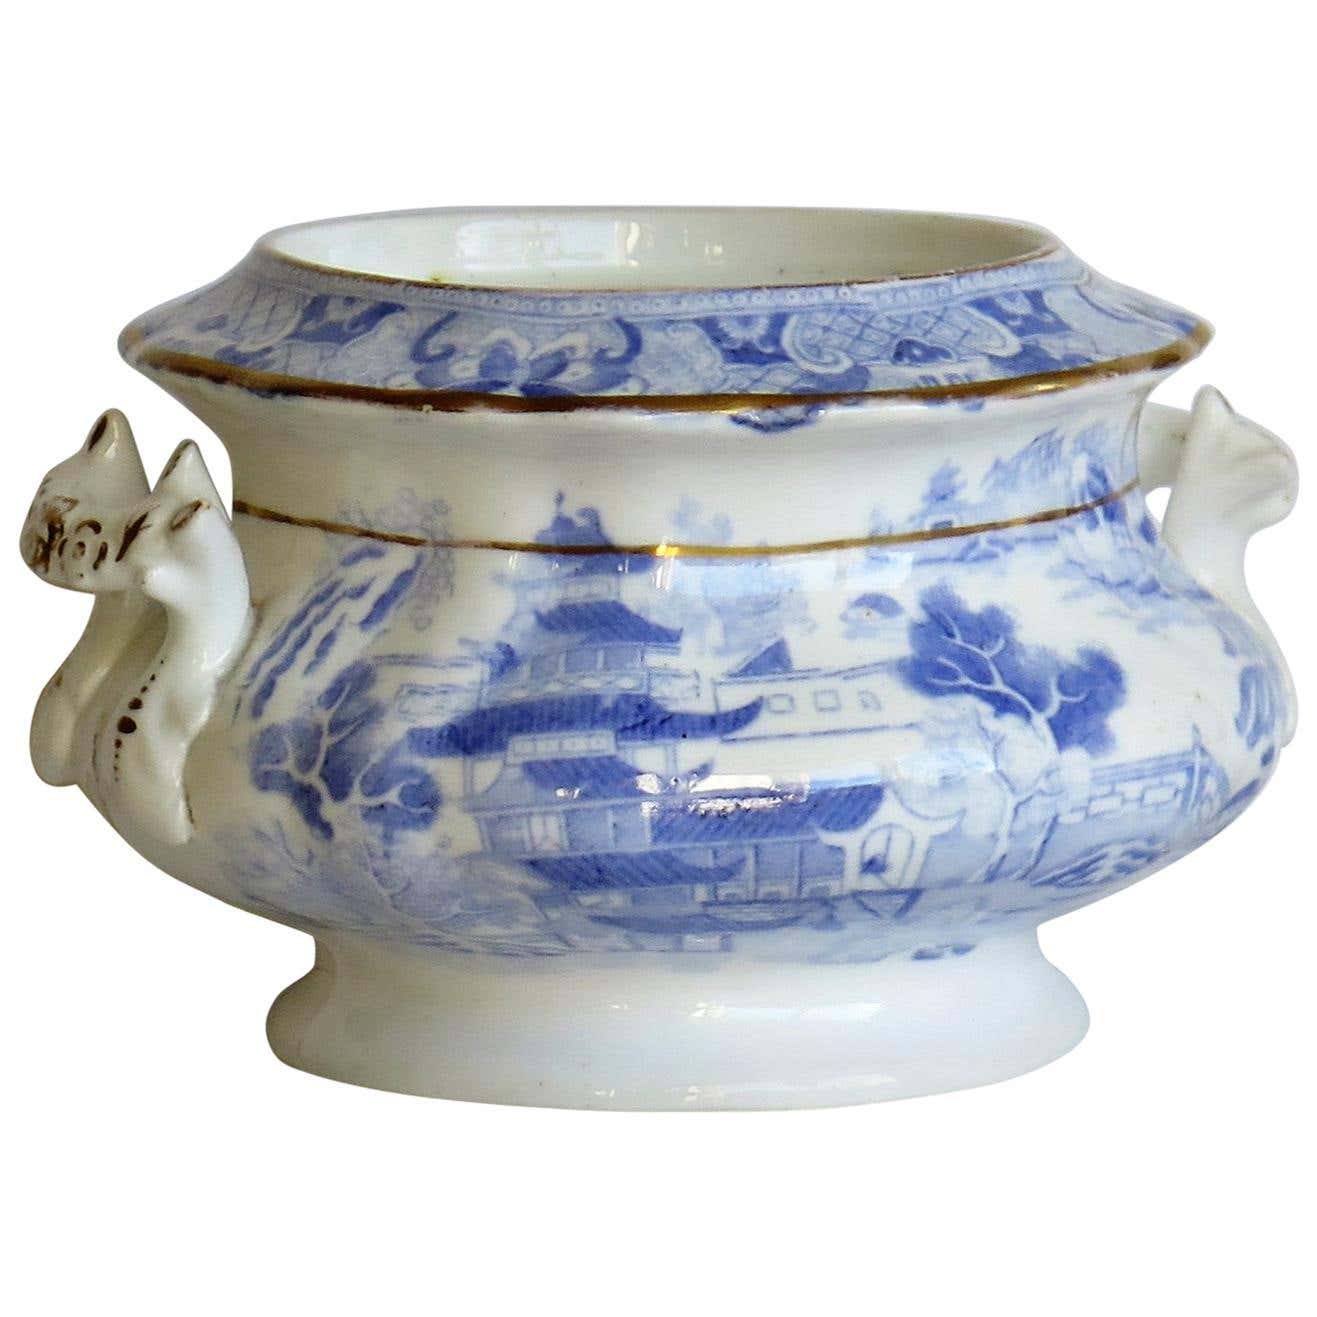 Miles Mason Porcelain Sucrier Patrón de sauce azul y blanco de Broseley, hacia 1810